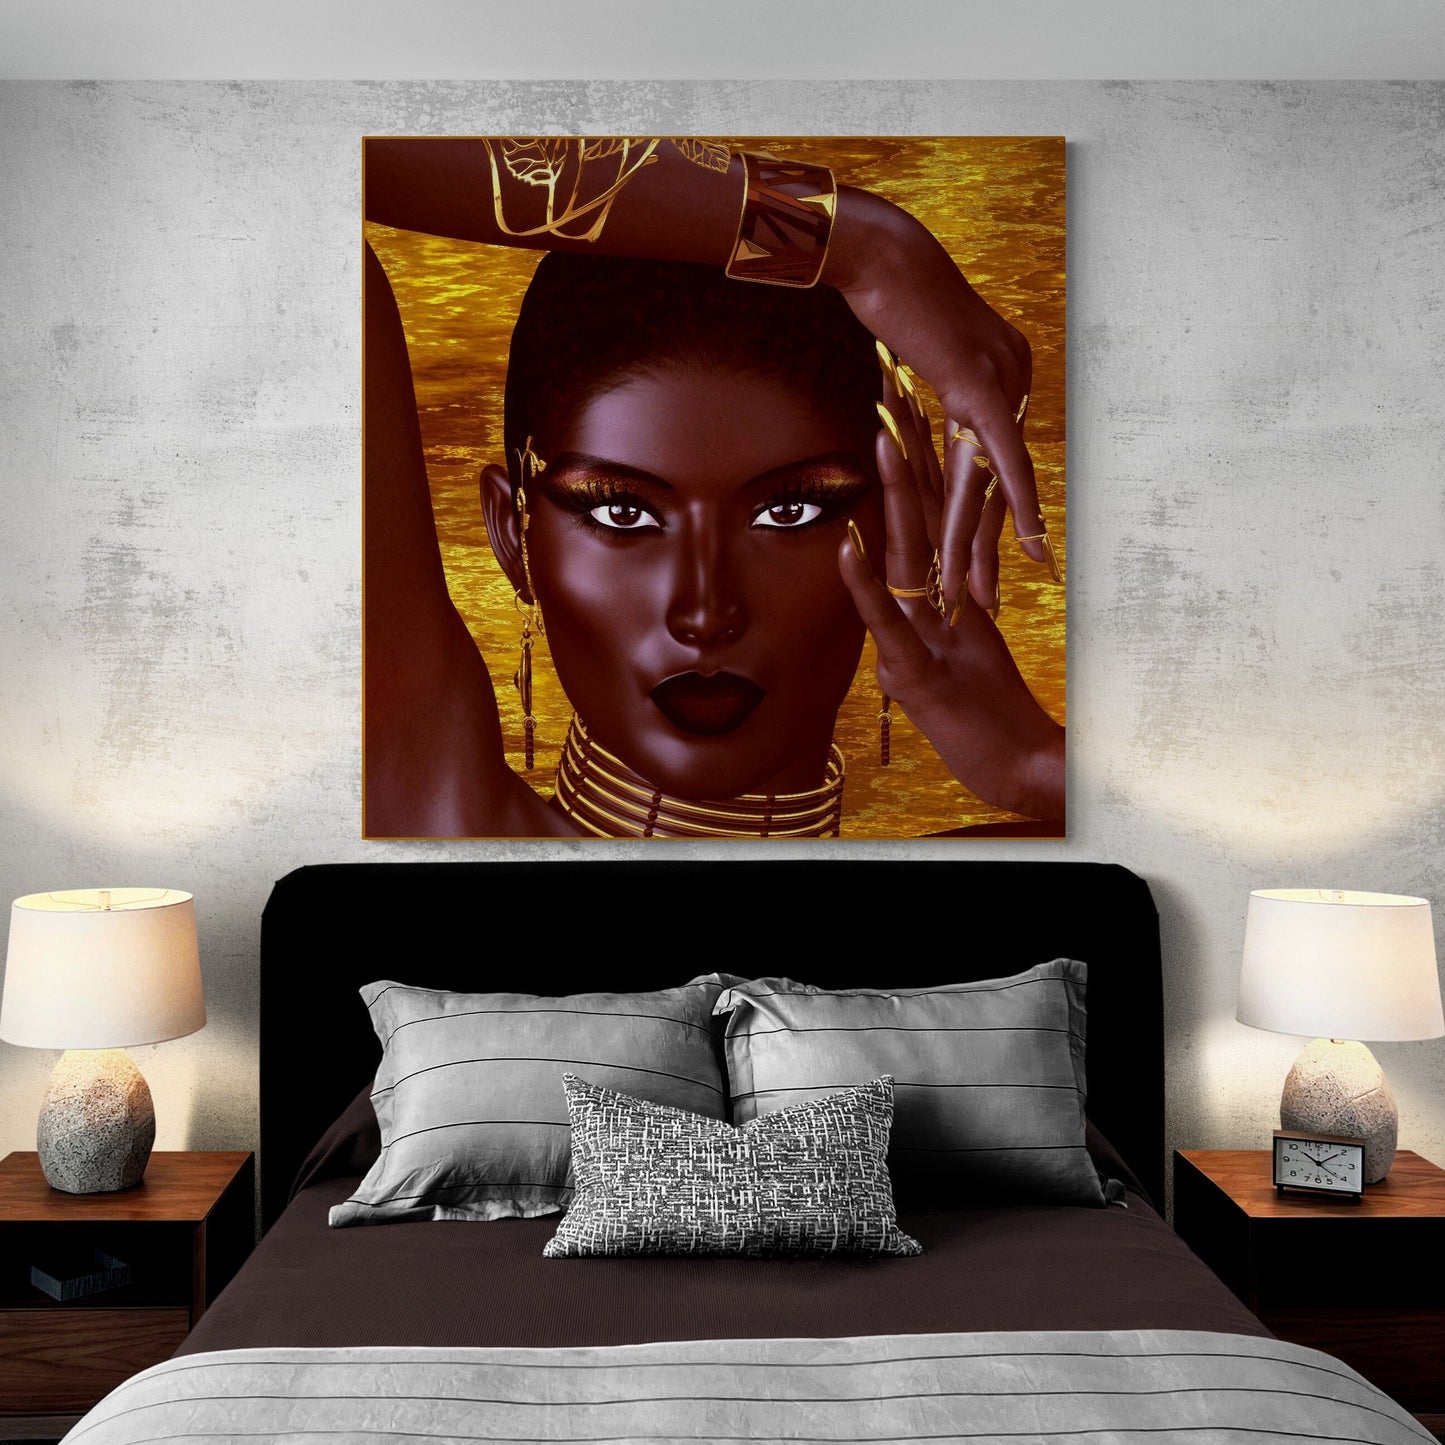 Tablou canvas - Pictura cu femeie africana - Cameradevis.ro Cameradevis.ro